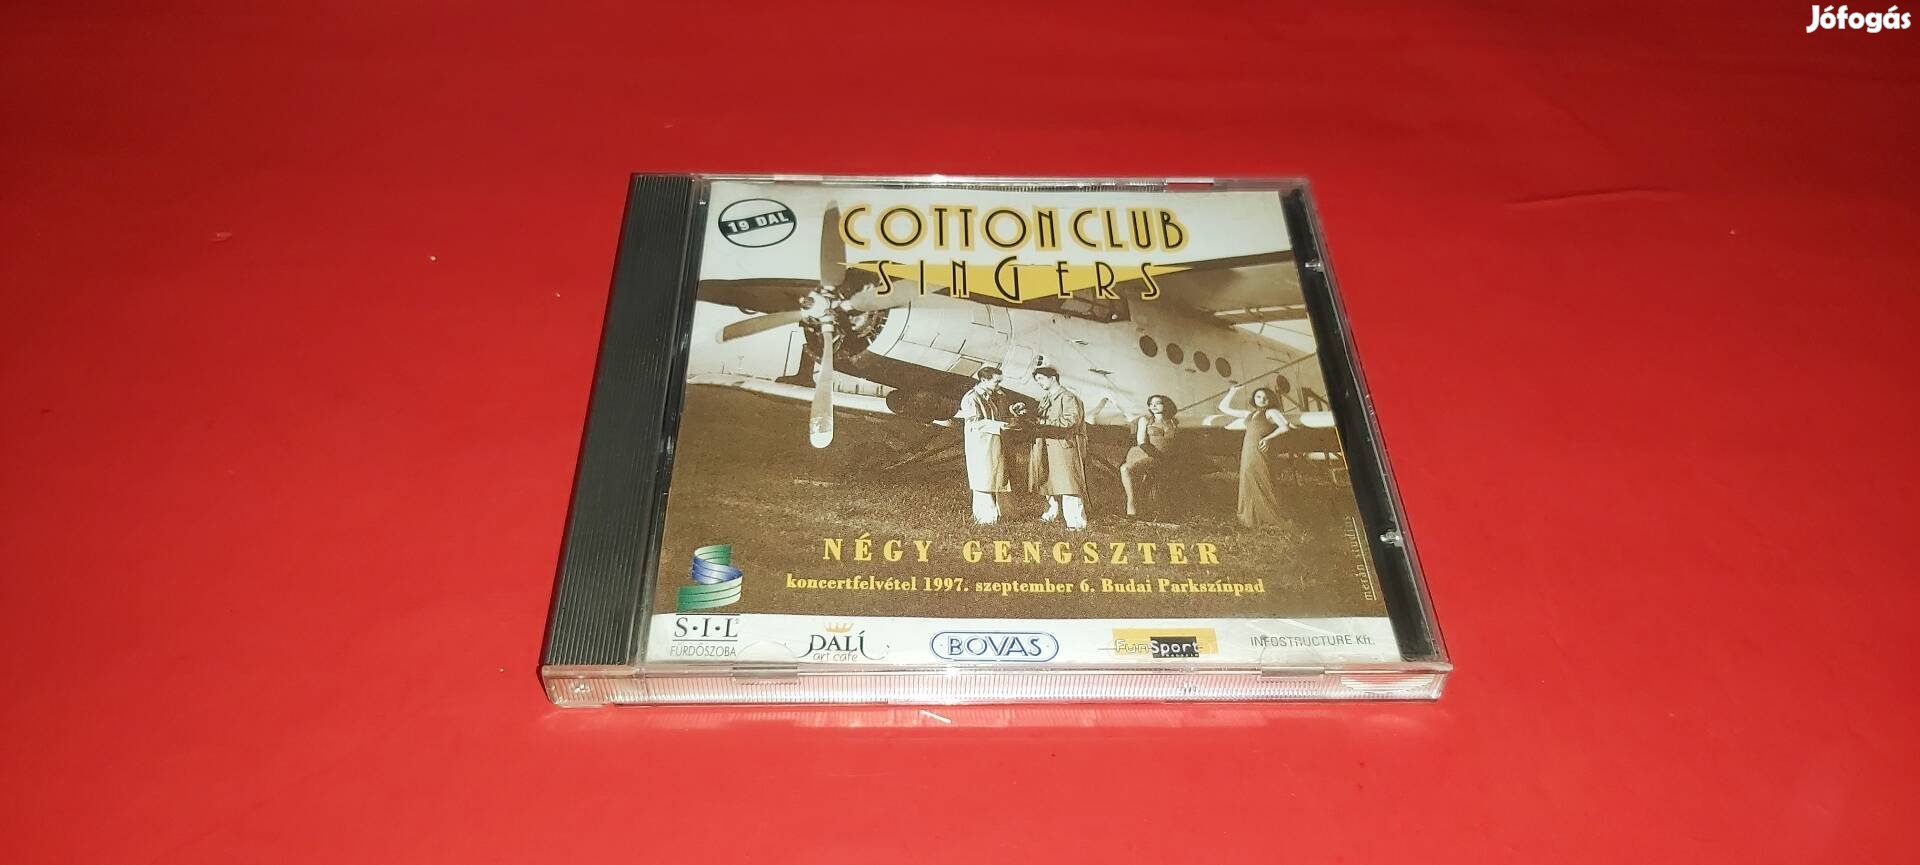 Cotton Club Singers Négy gengszter Cd 1998